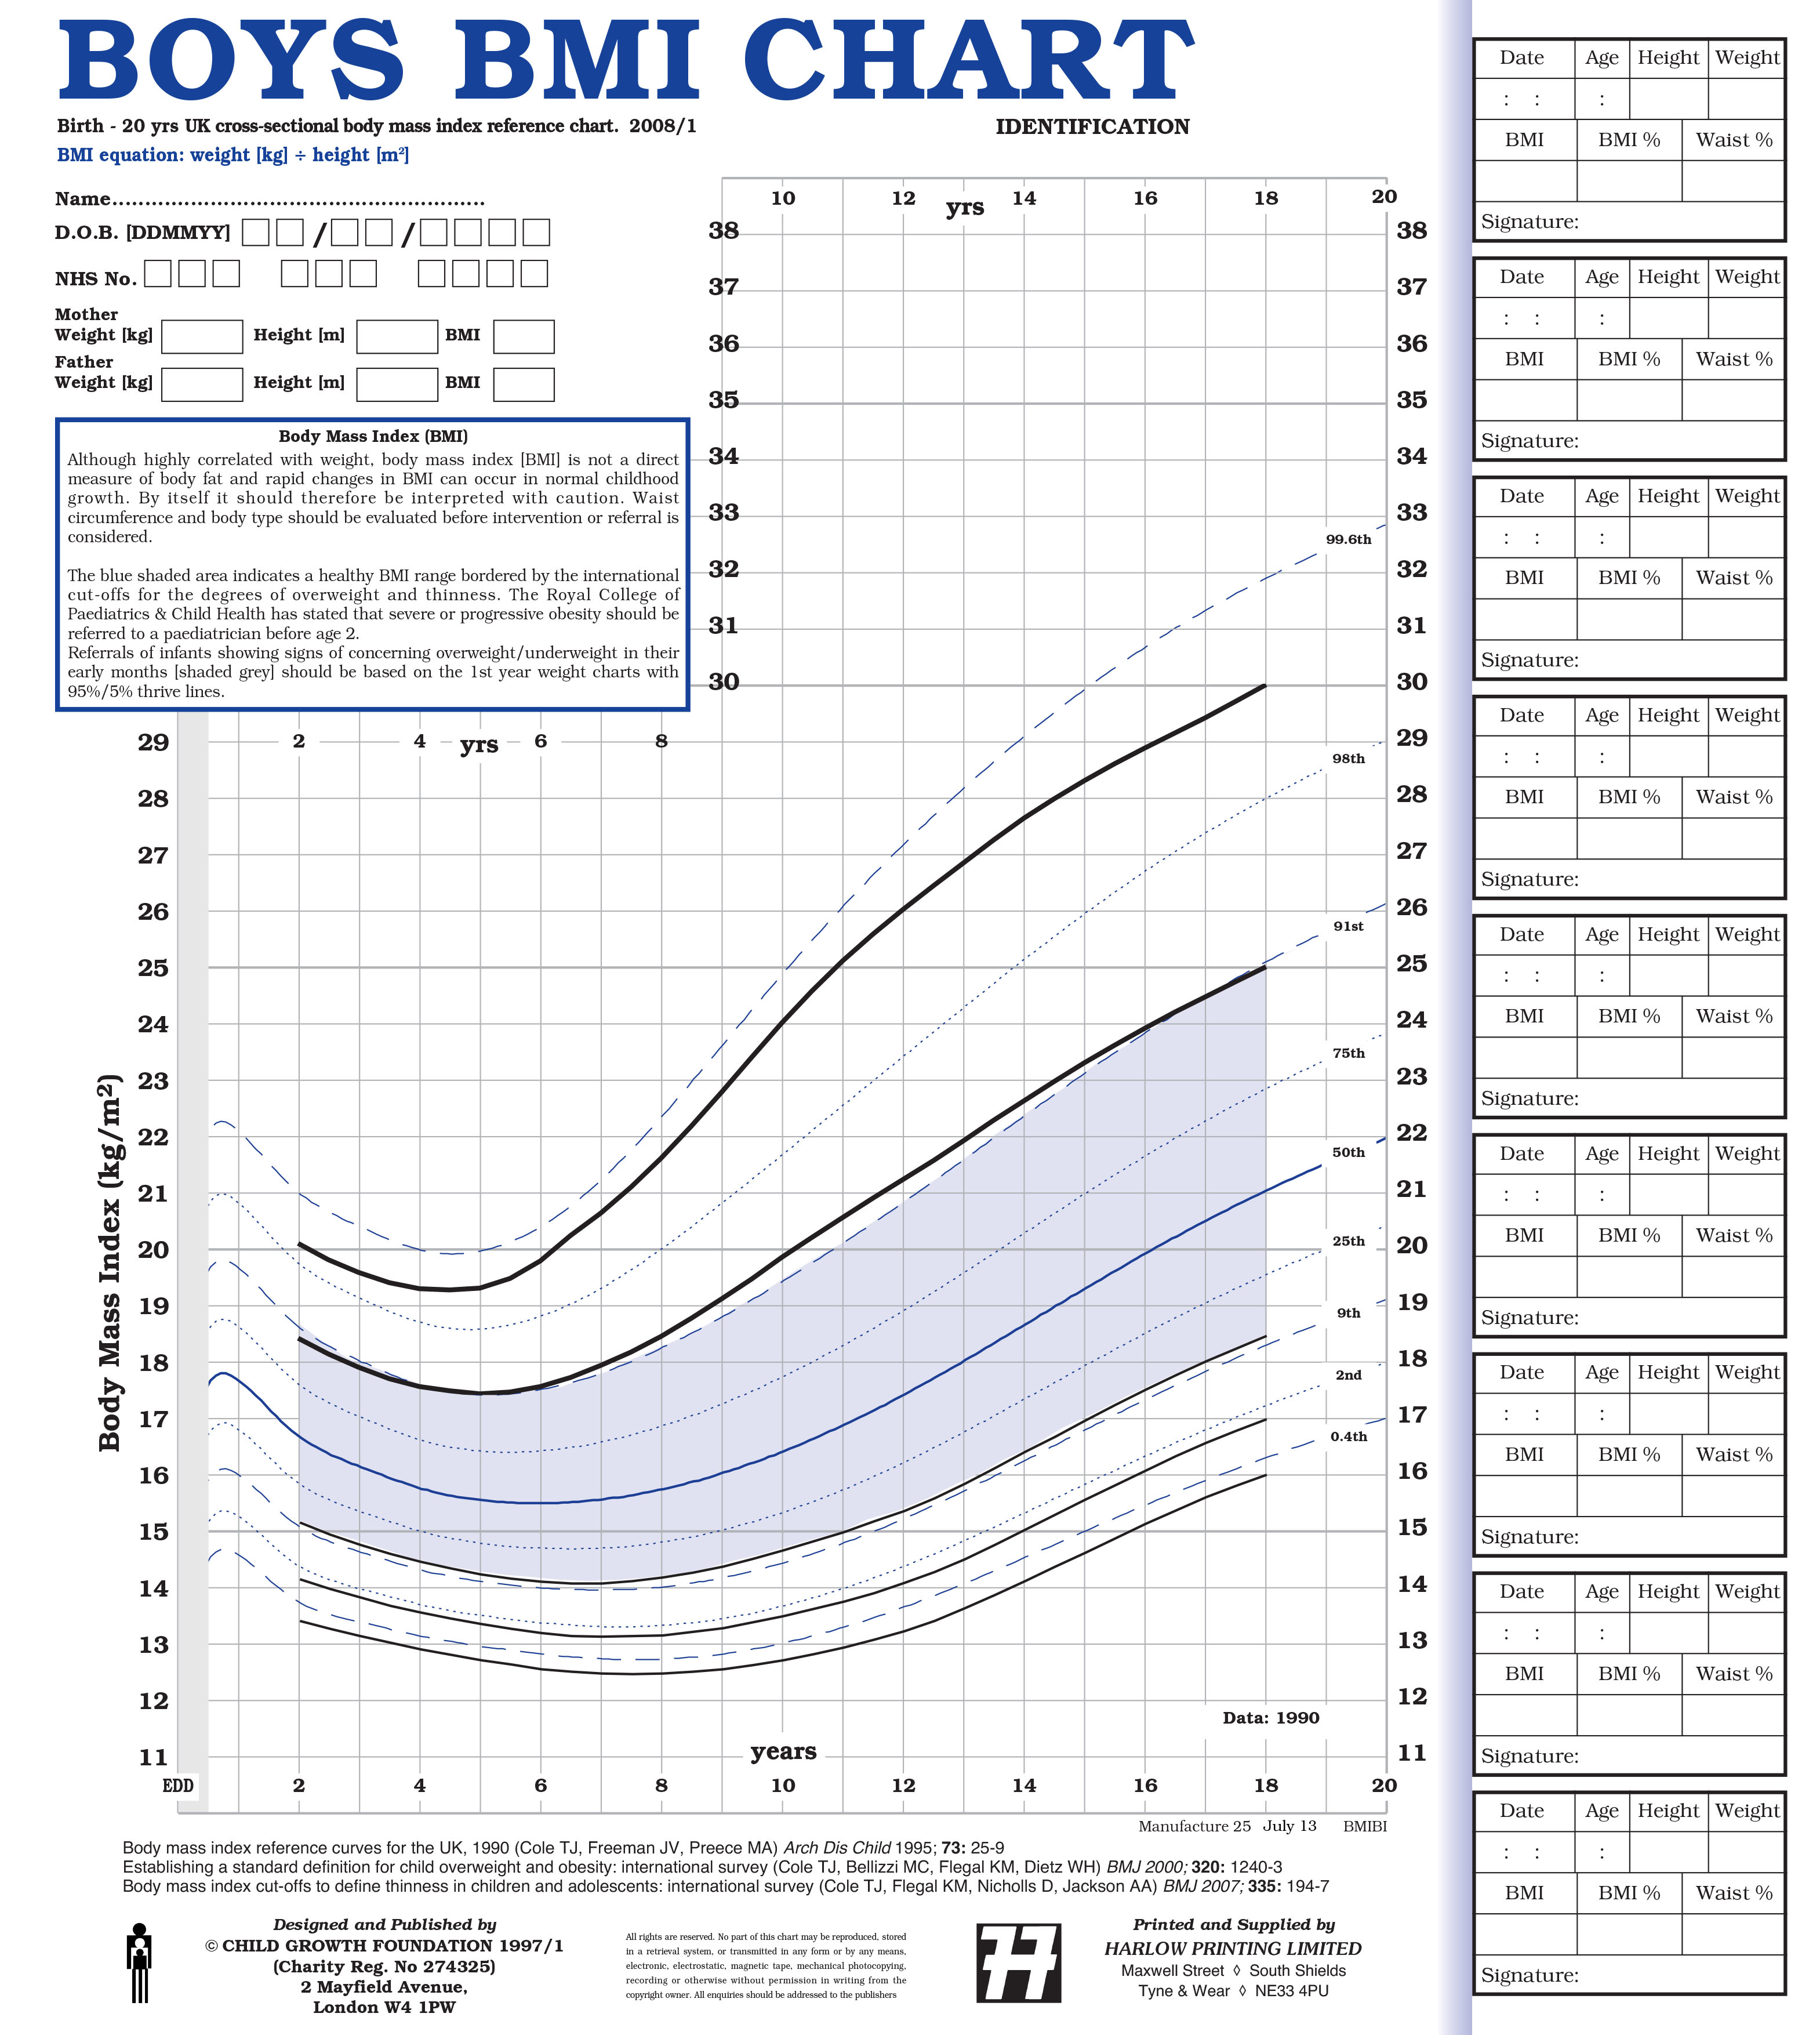 UK90 BMI Identification Charts Health for all Children